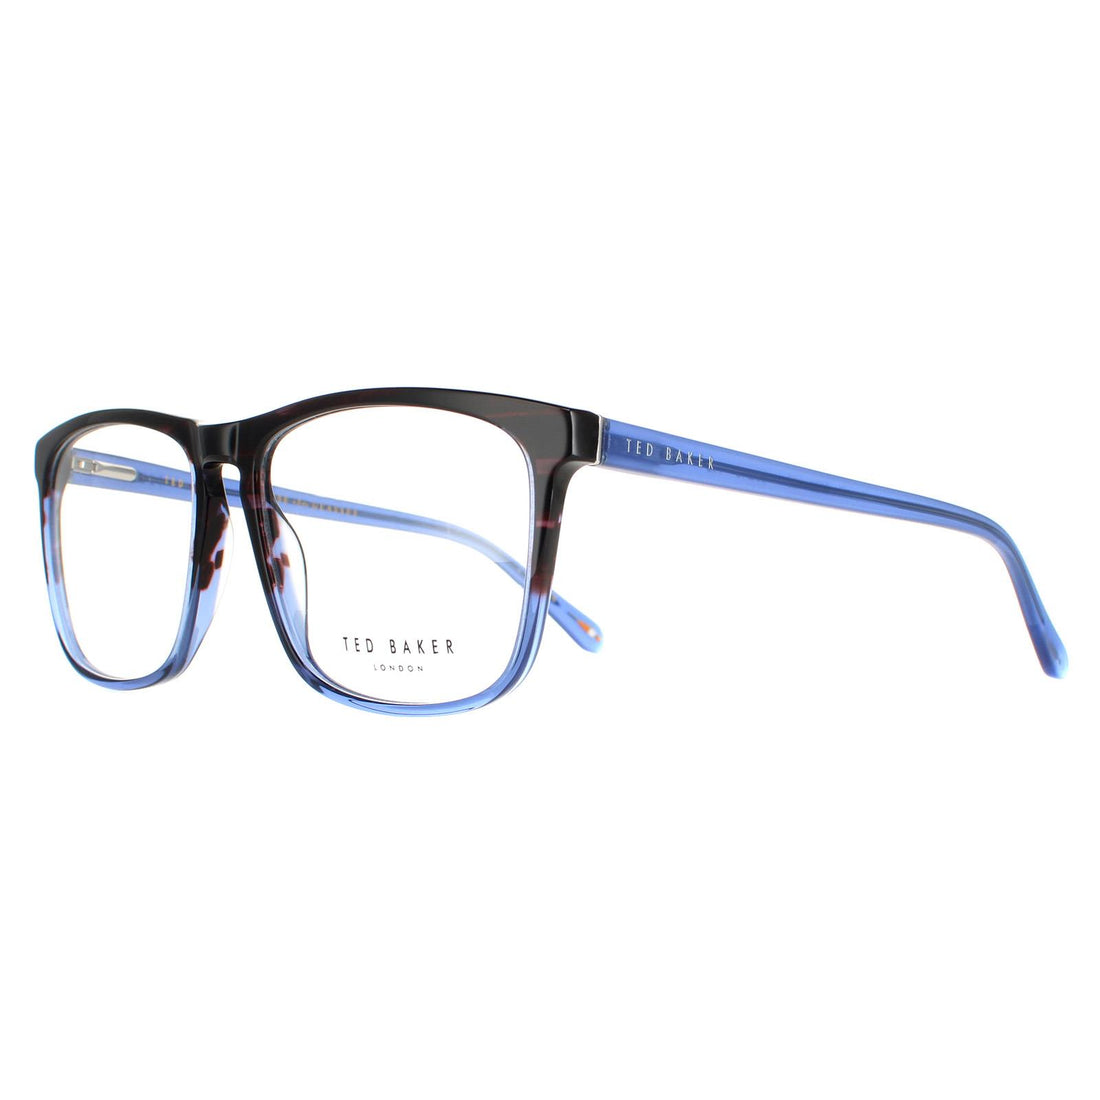 Ted Baker Glasses Frames TB8229 Cornell 160 Blue Men – Discounted 